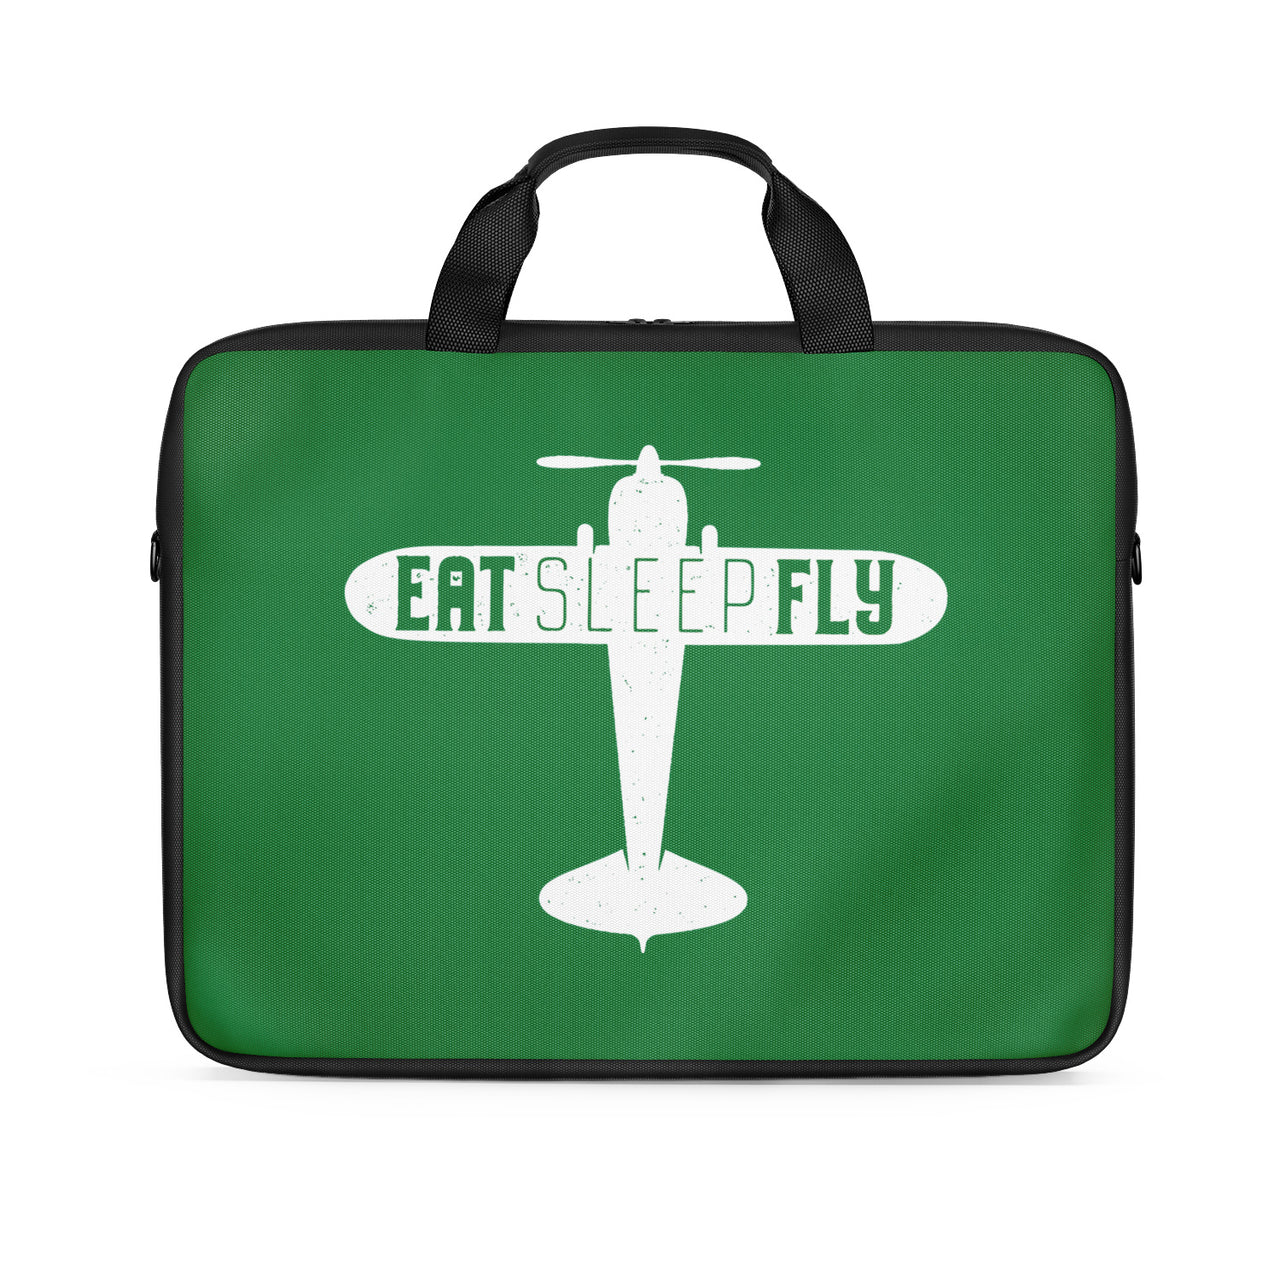 Eat Sleep Fly & Propeller Designed Laptop & Tablet Bags